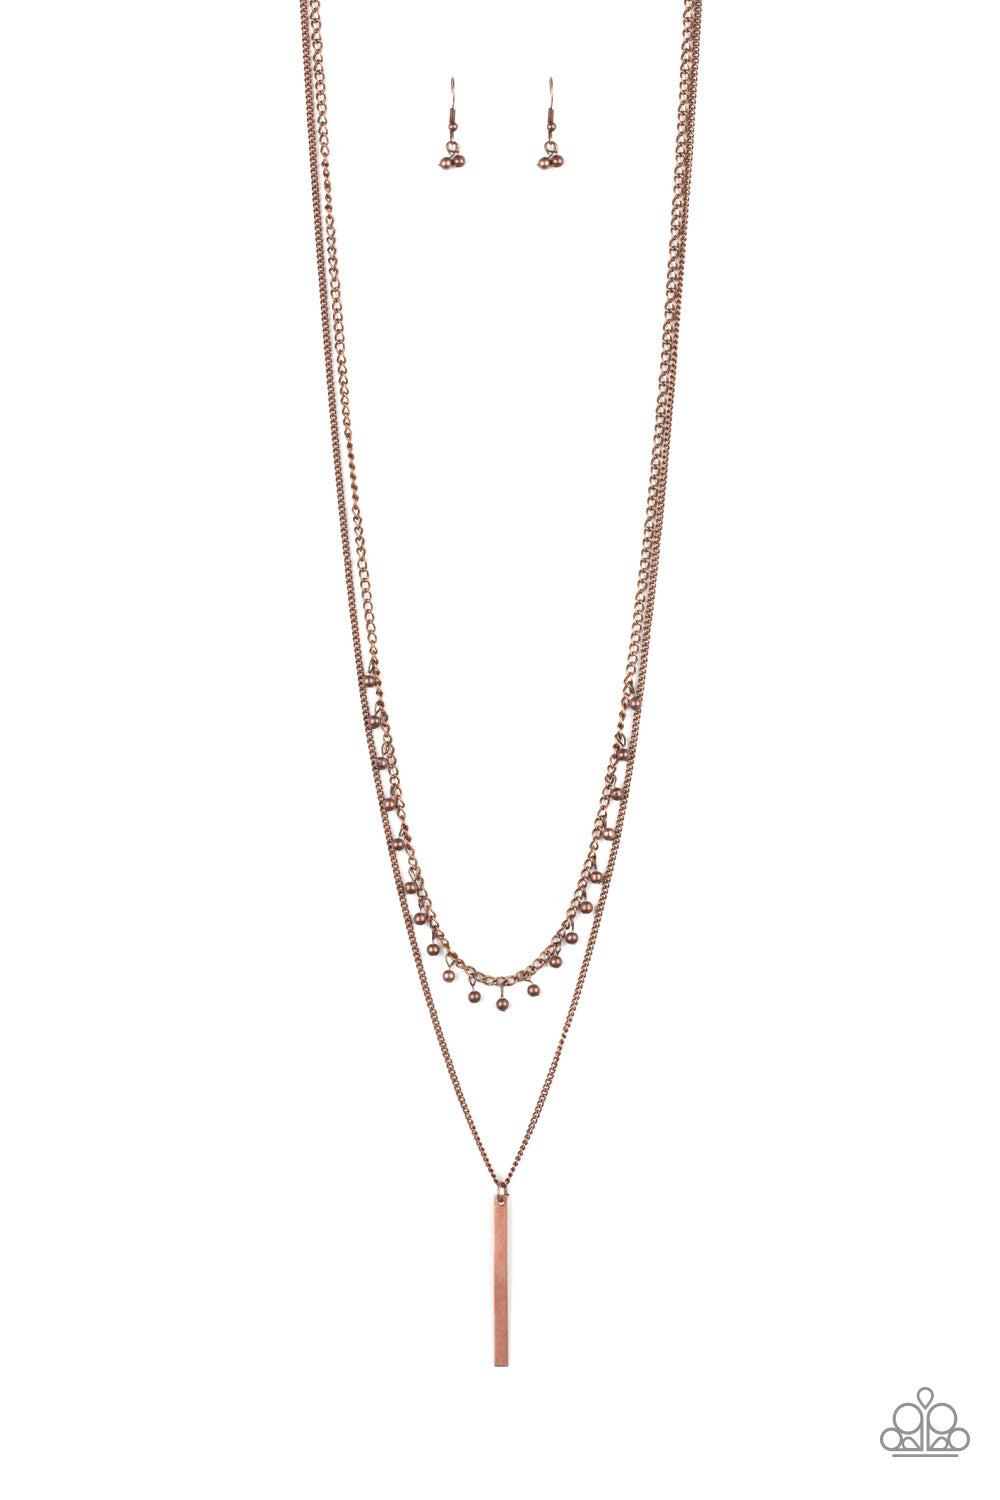 Keep Your Eye On The Pendulum - copper - Paparazzi necklace